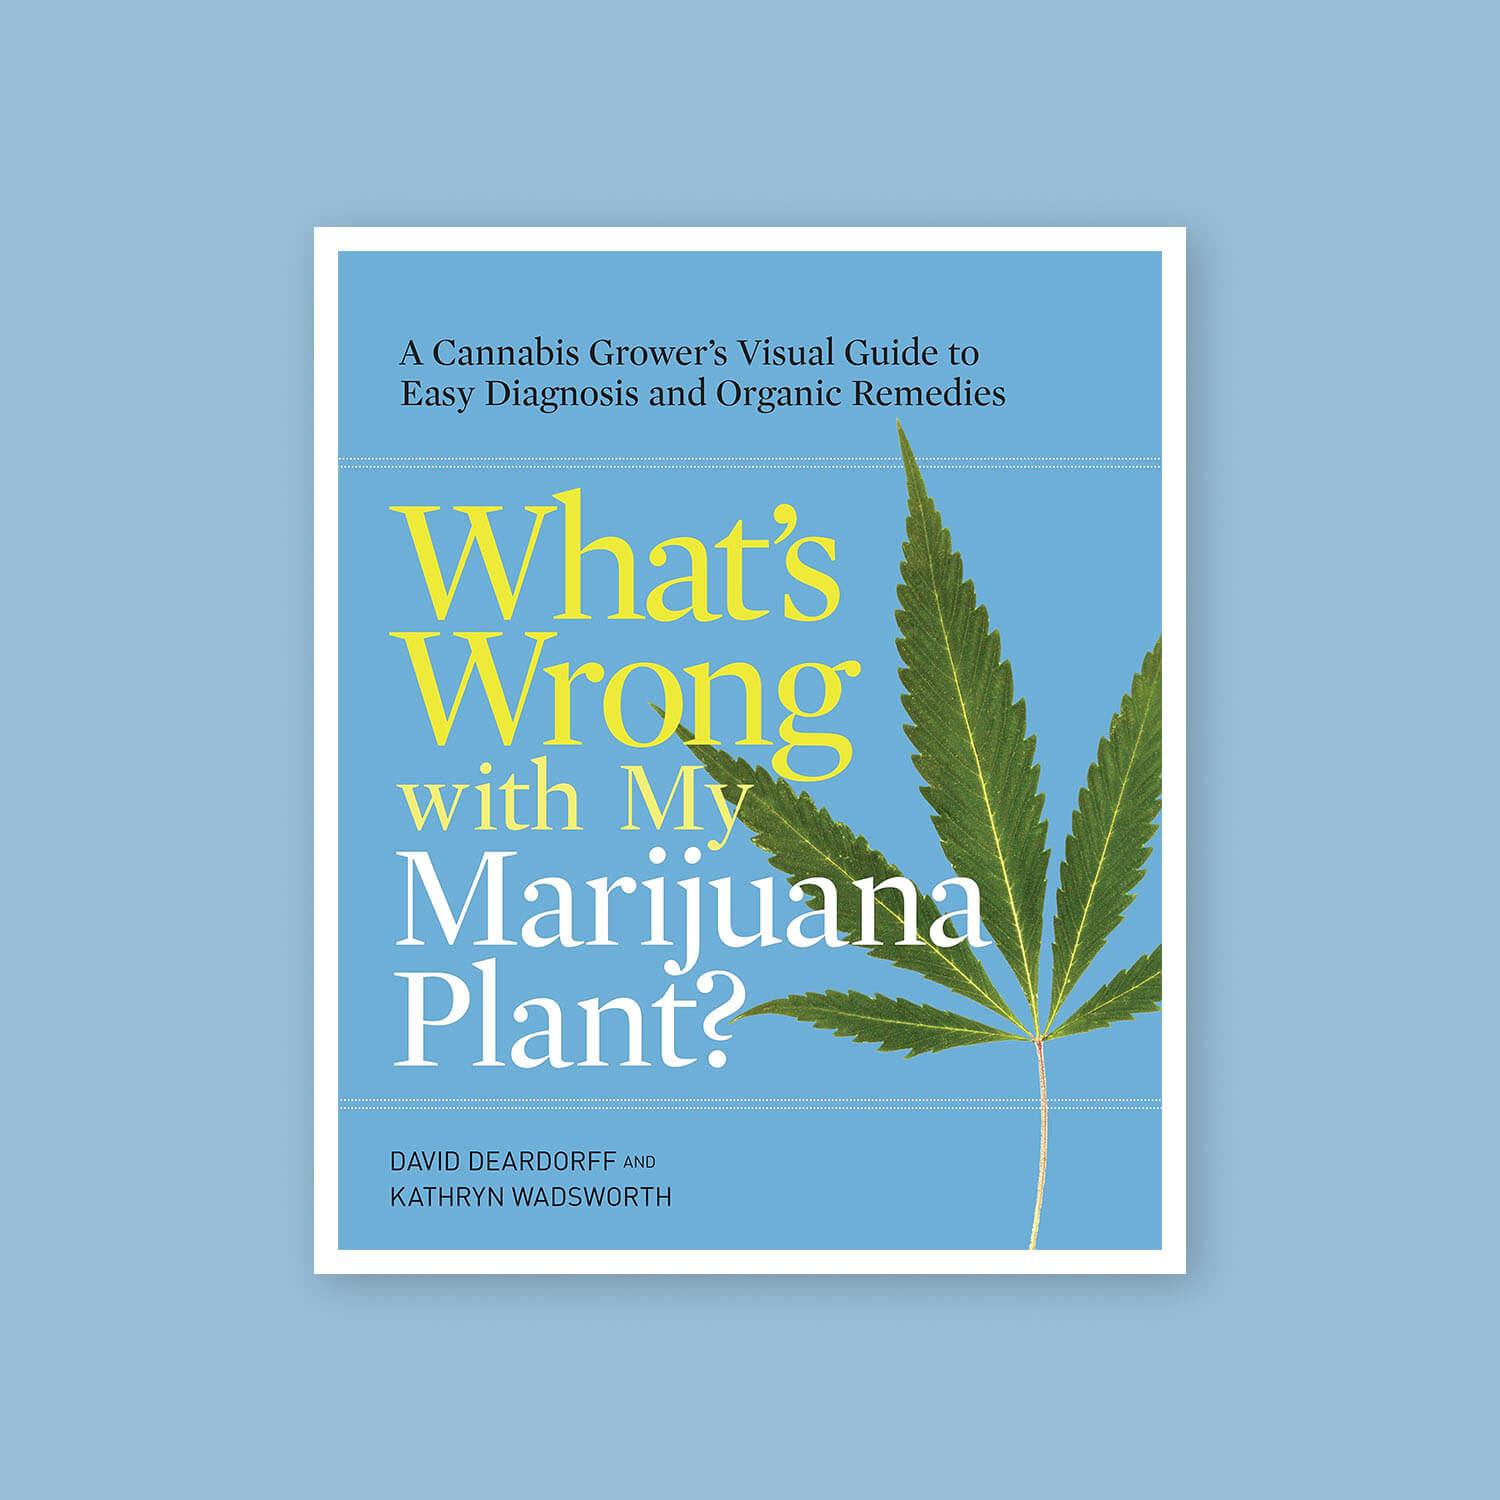 What's wrong with my marijuana plant - Goldleaf bookshelf